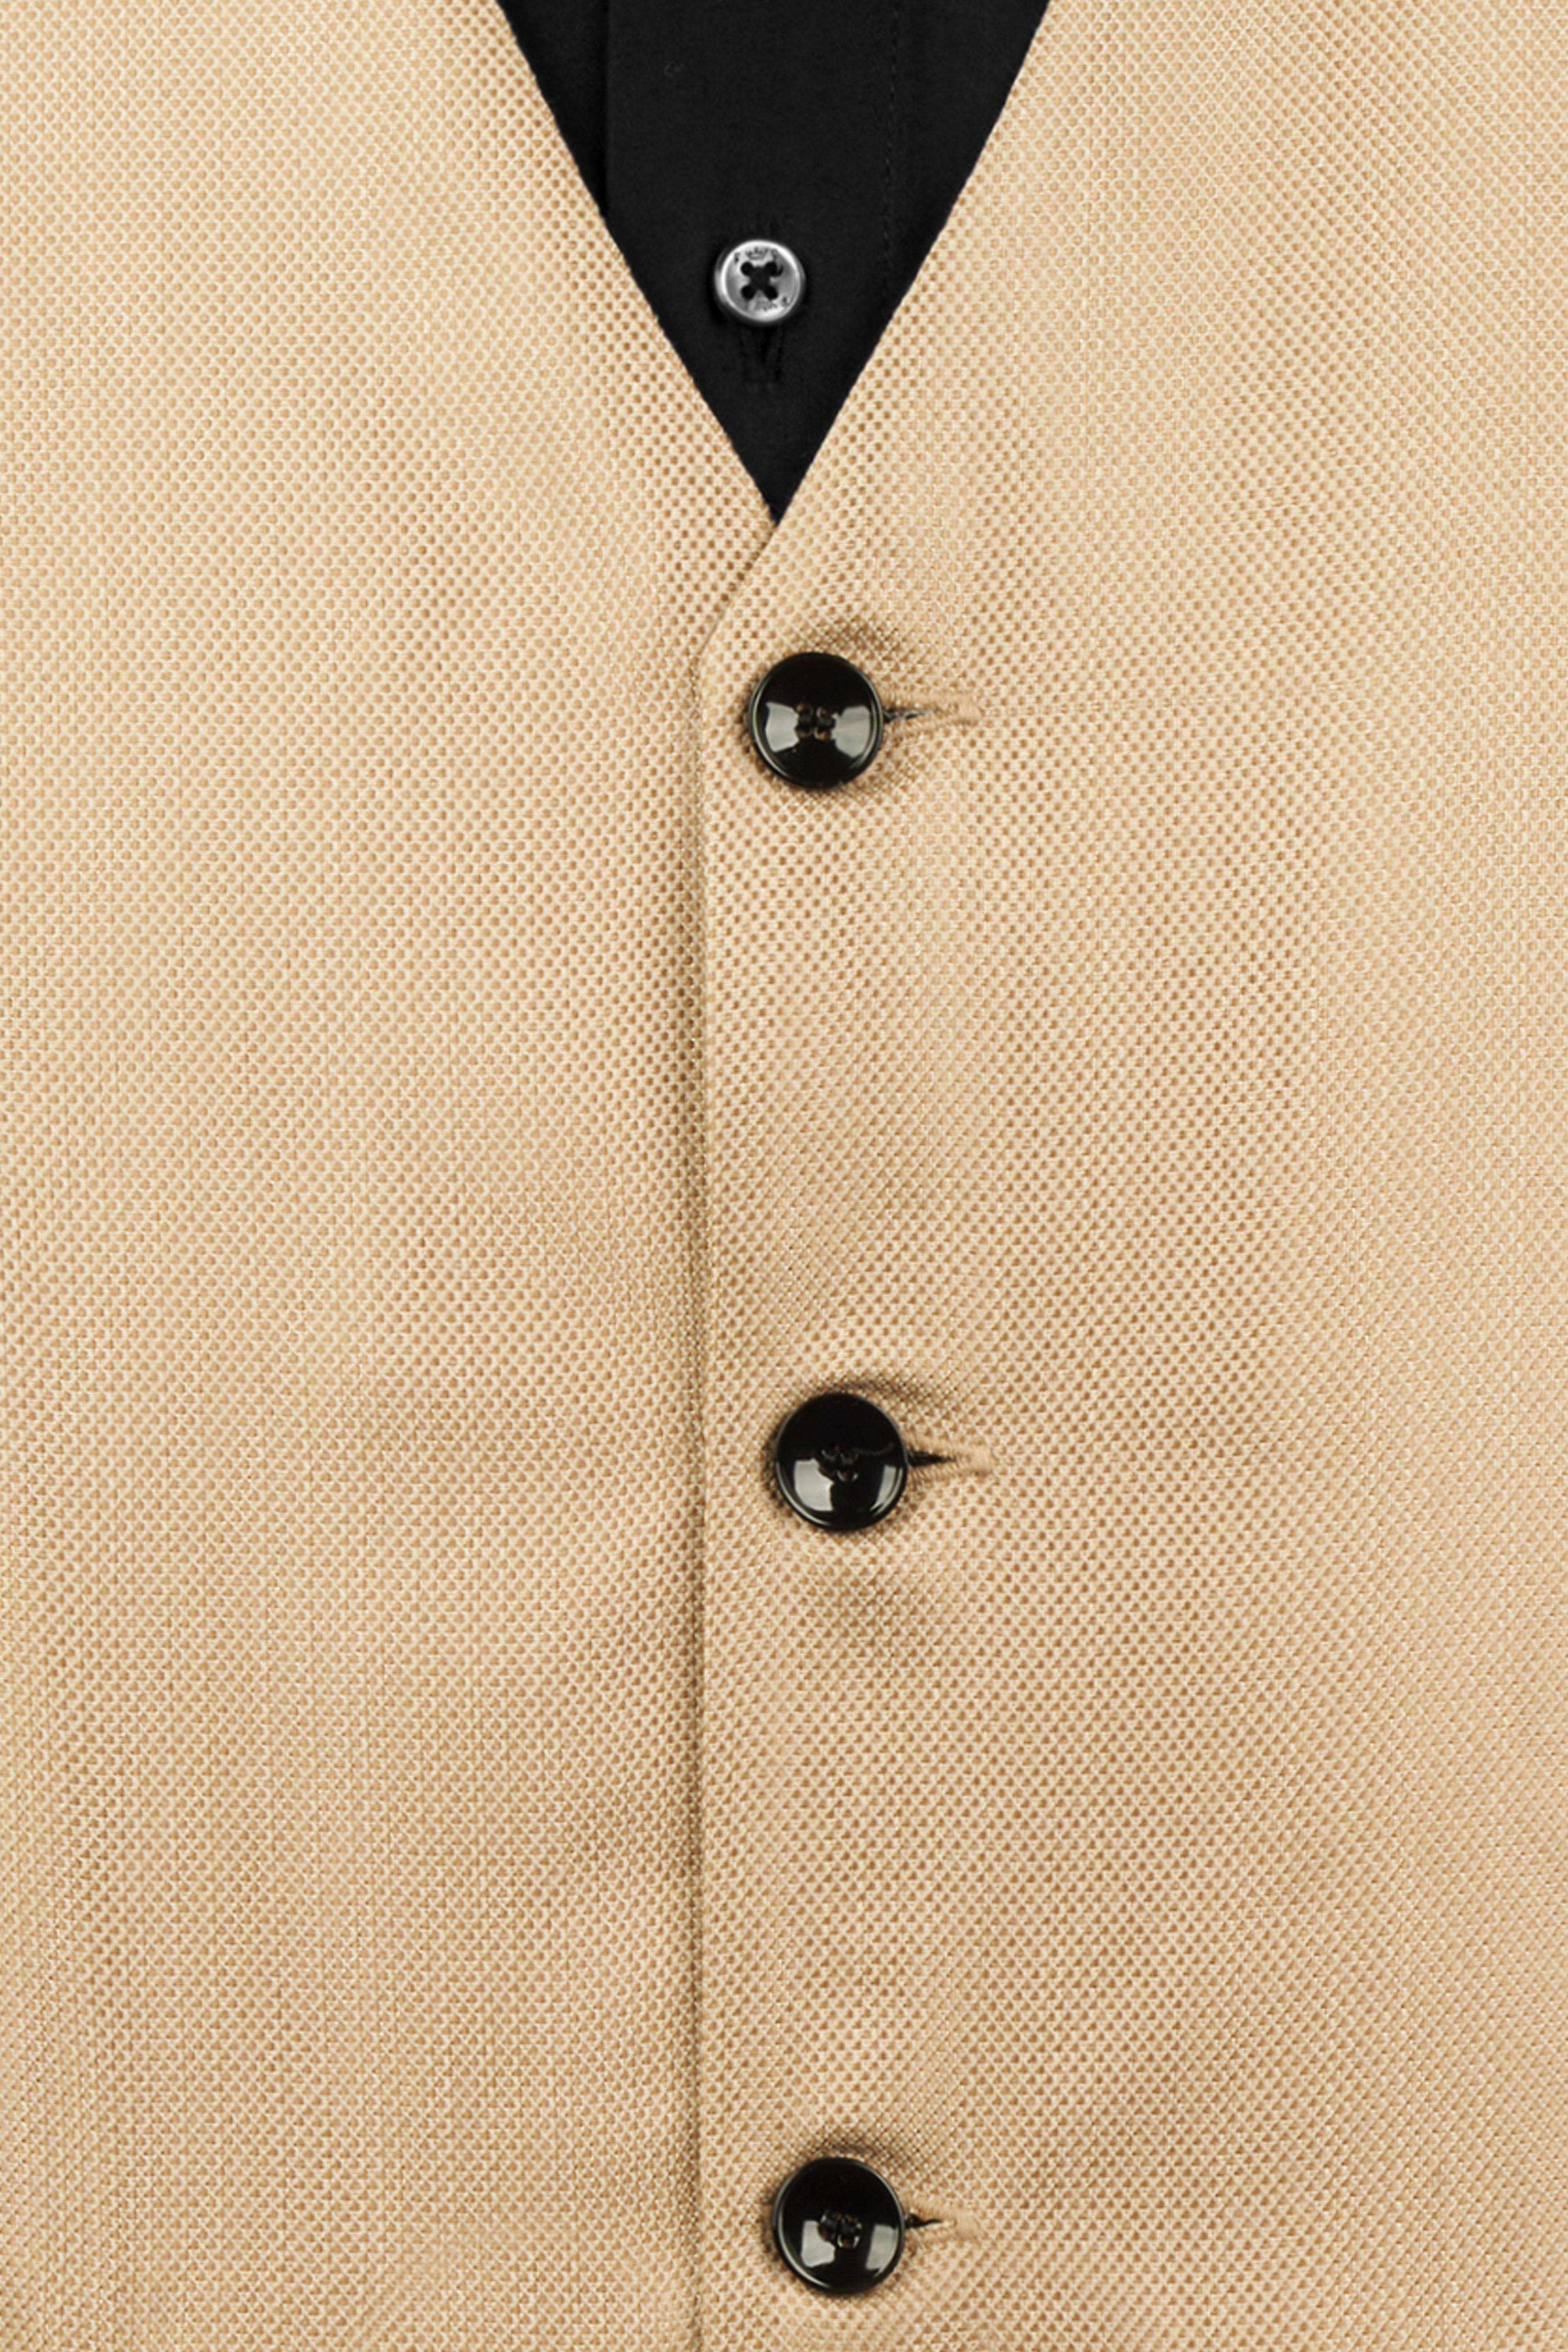 Thistle Brown Dobby Textured Tuxedo Suit